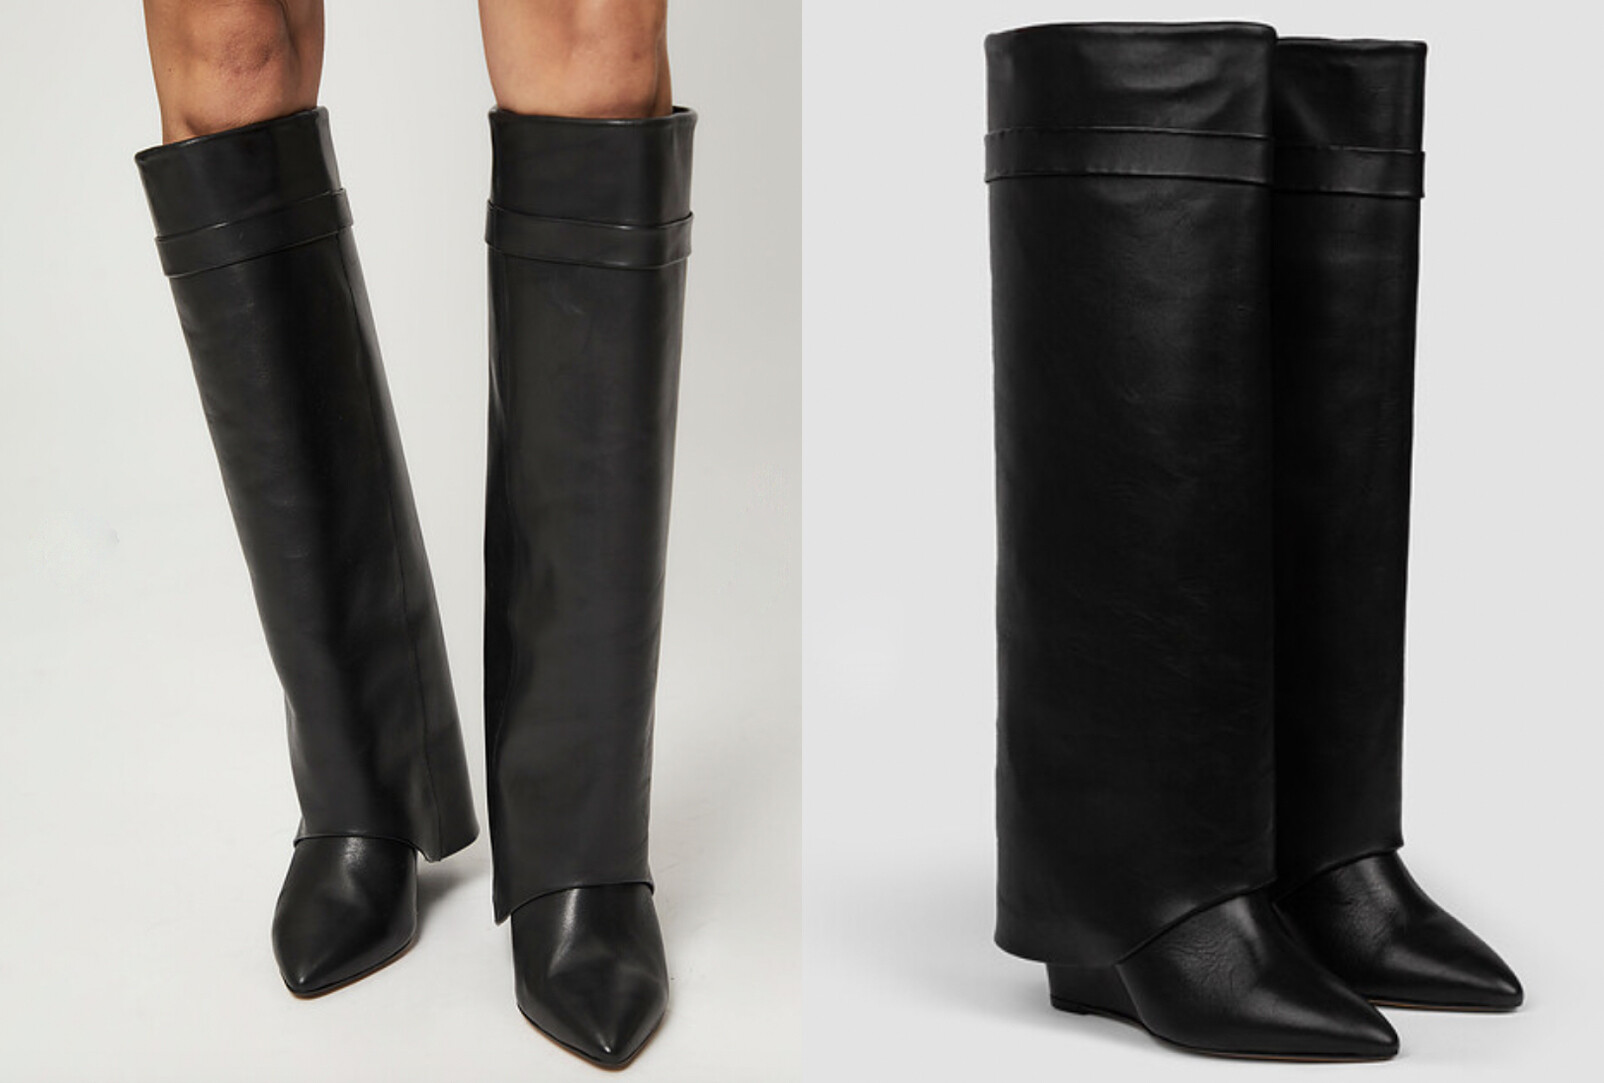 Givenchy designer dupe laarzen